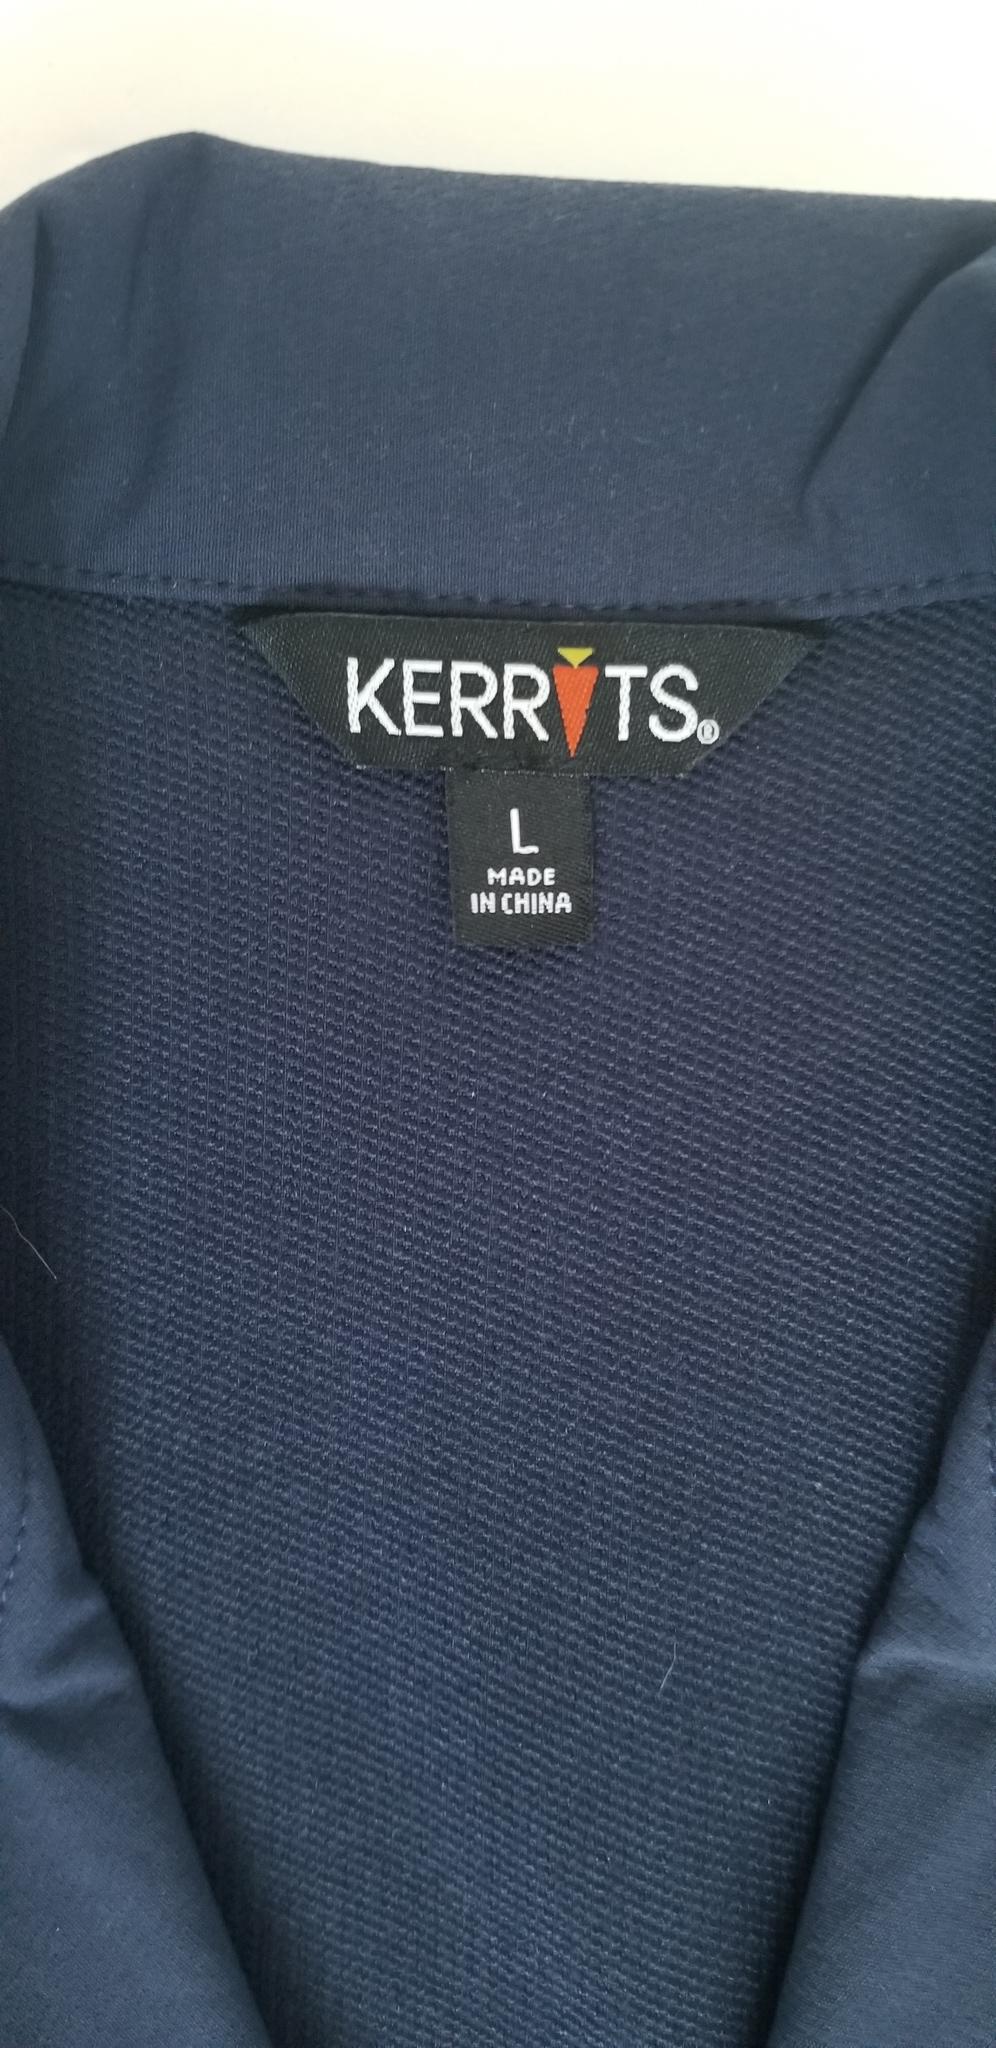 Kerrits Kids Competitor Koat - Navy - Youth Large